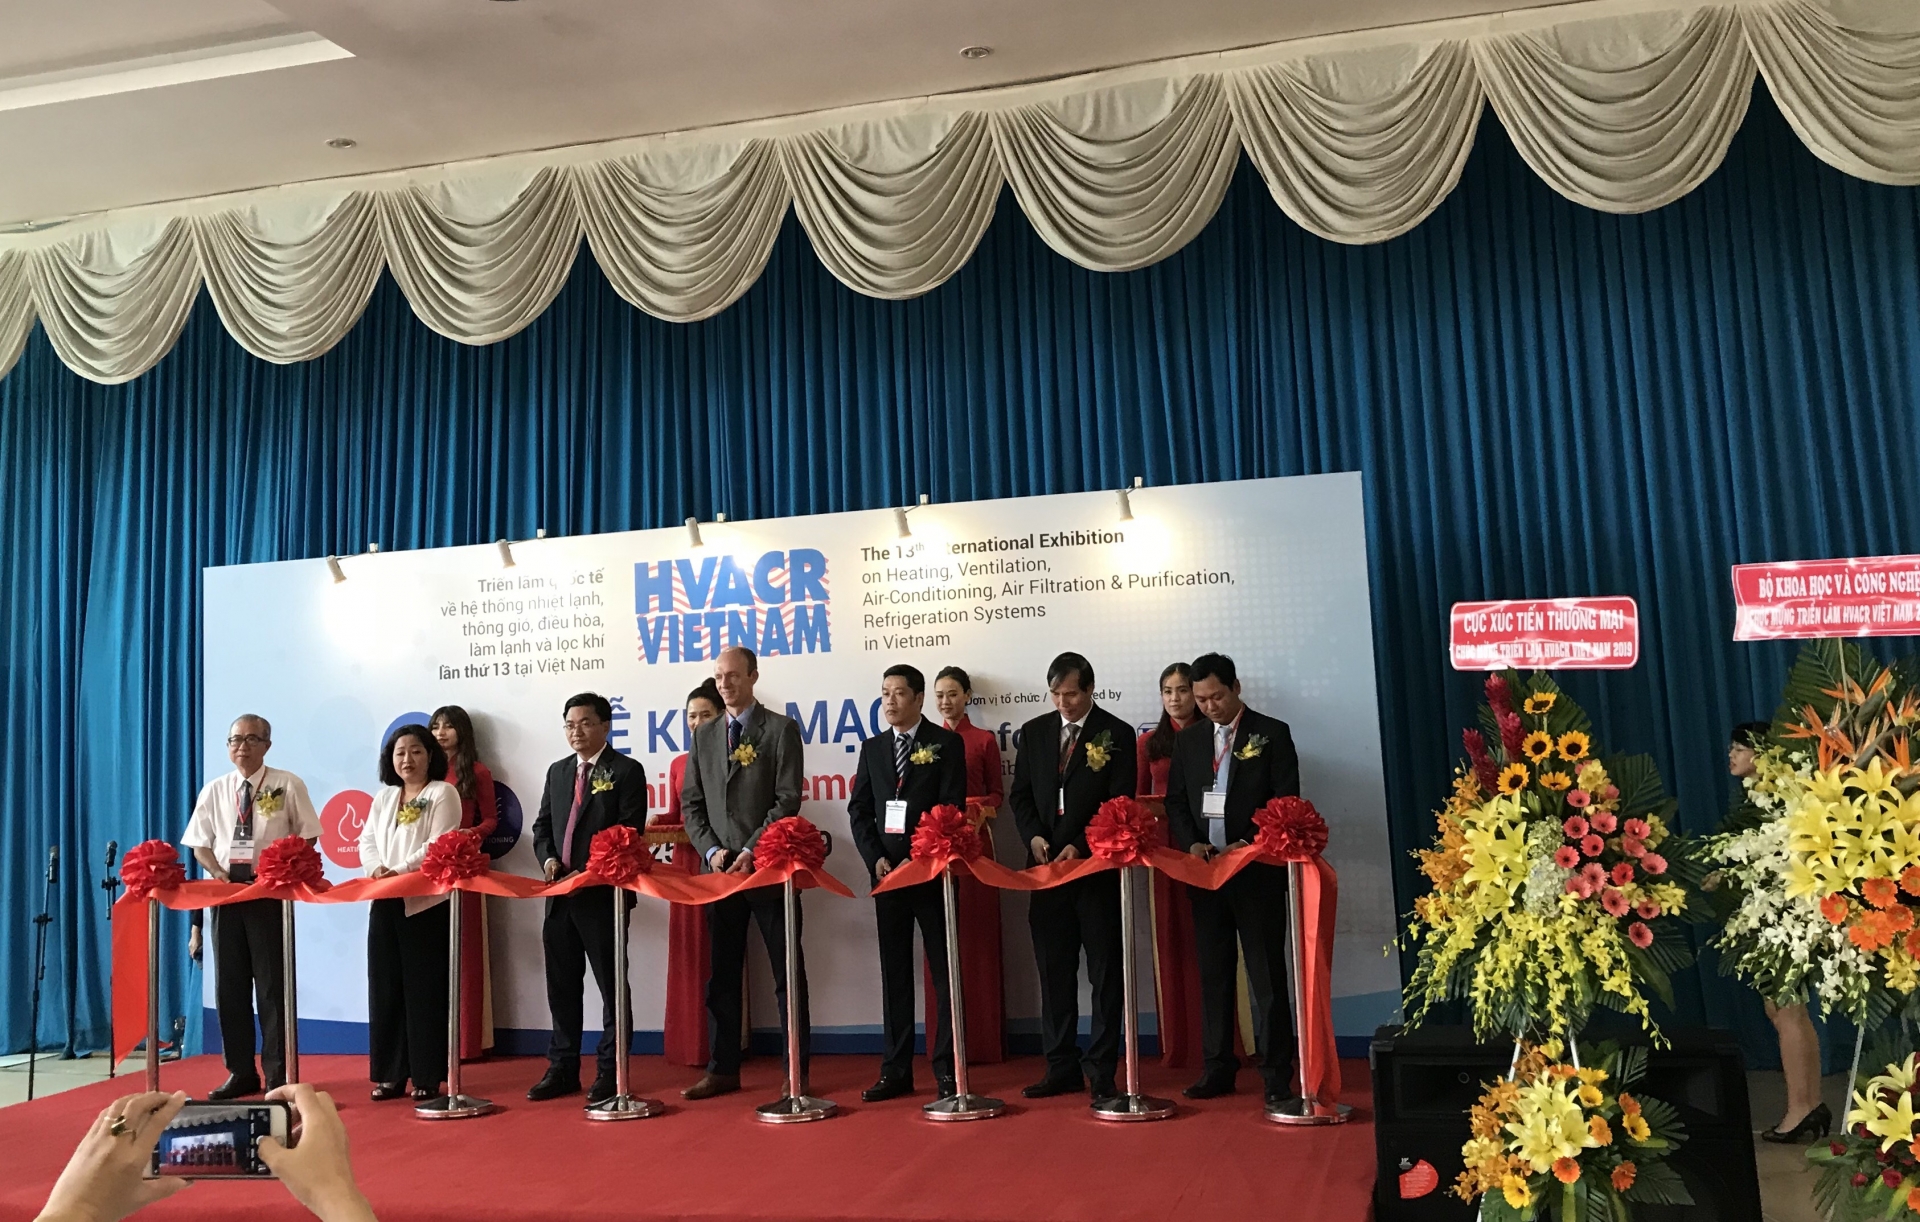 HVACR Vietnam kicked off in Ho Chi Minh City